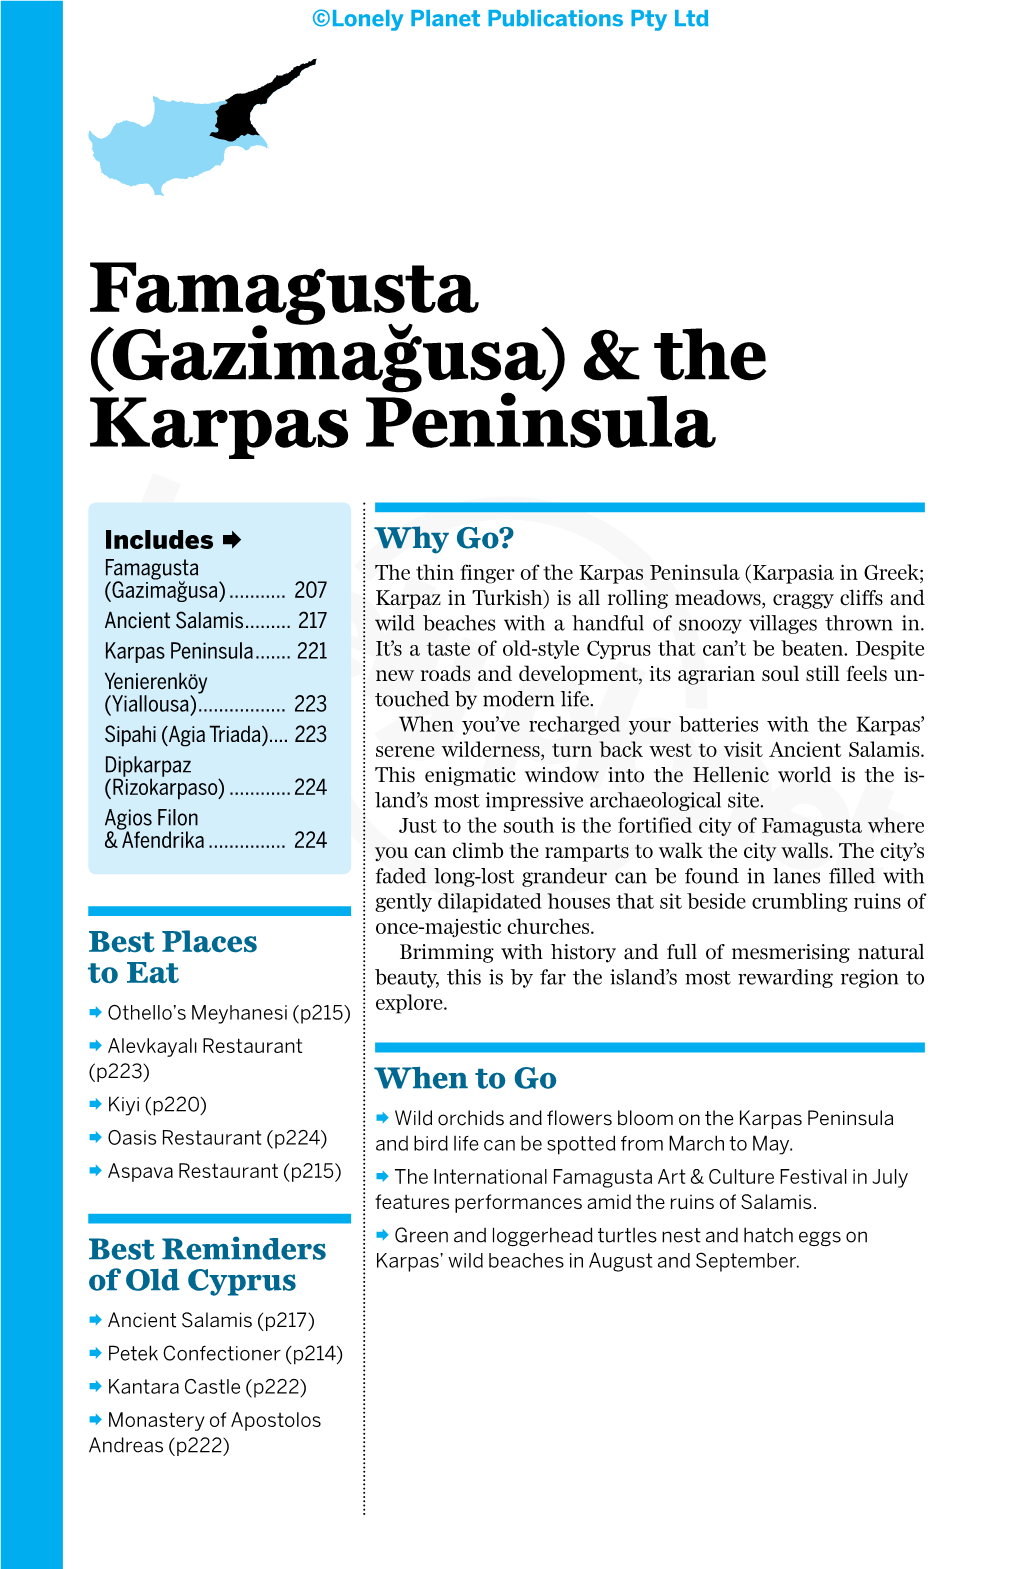 Famagusta (Gazimağusa) & the Karpas Peninsula